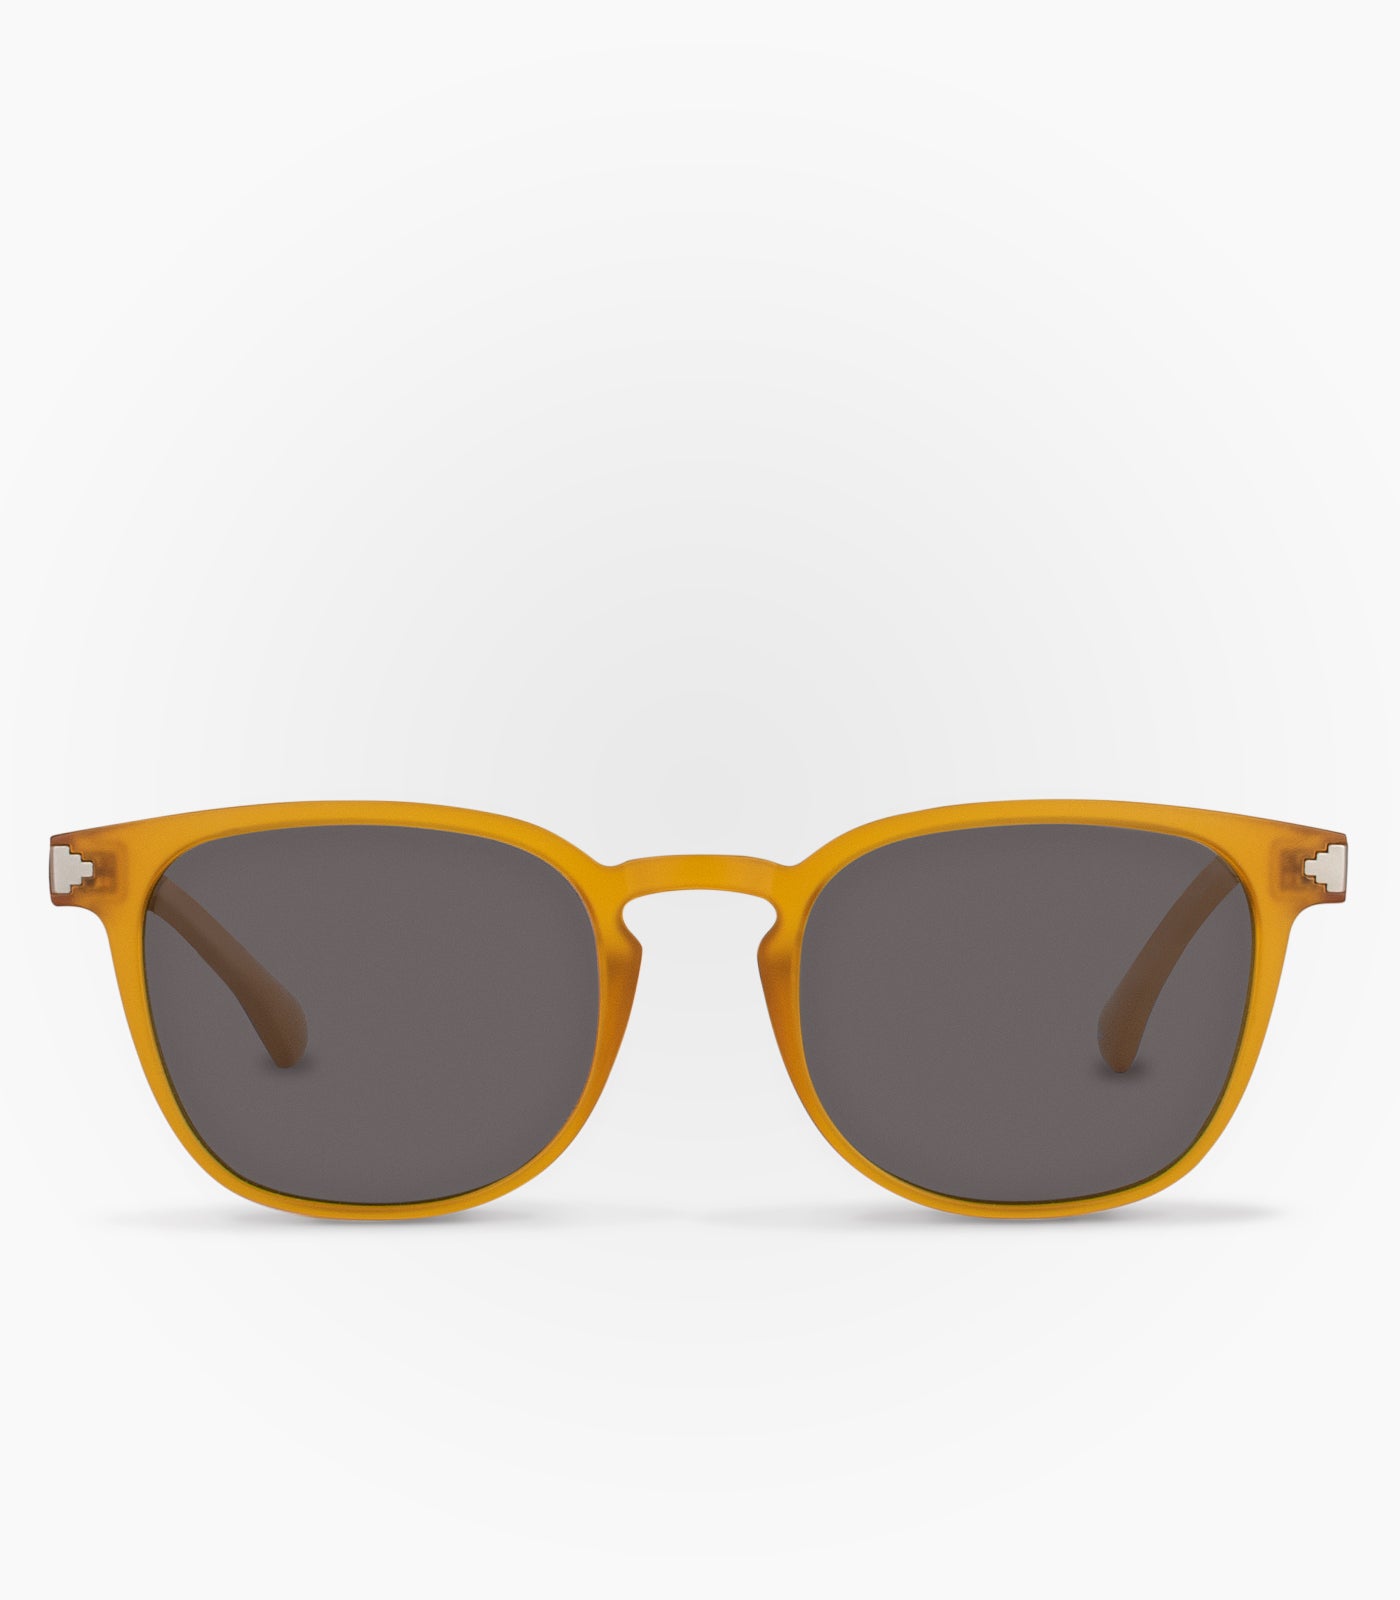 Sunglasses Breeze Mustard Karün America North 